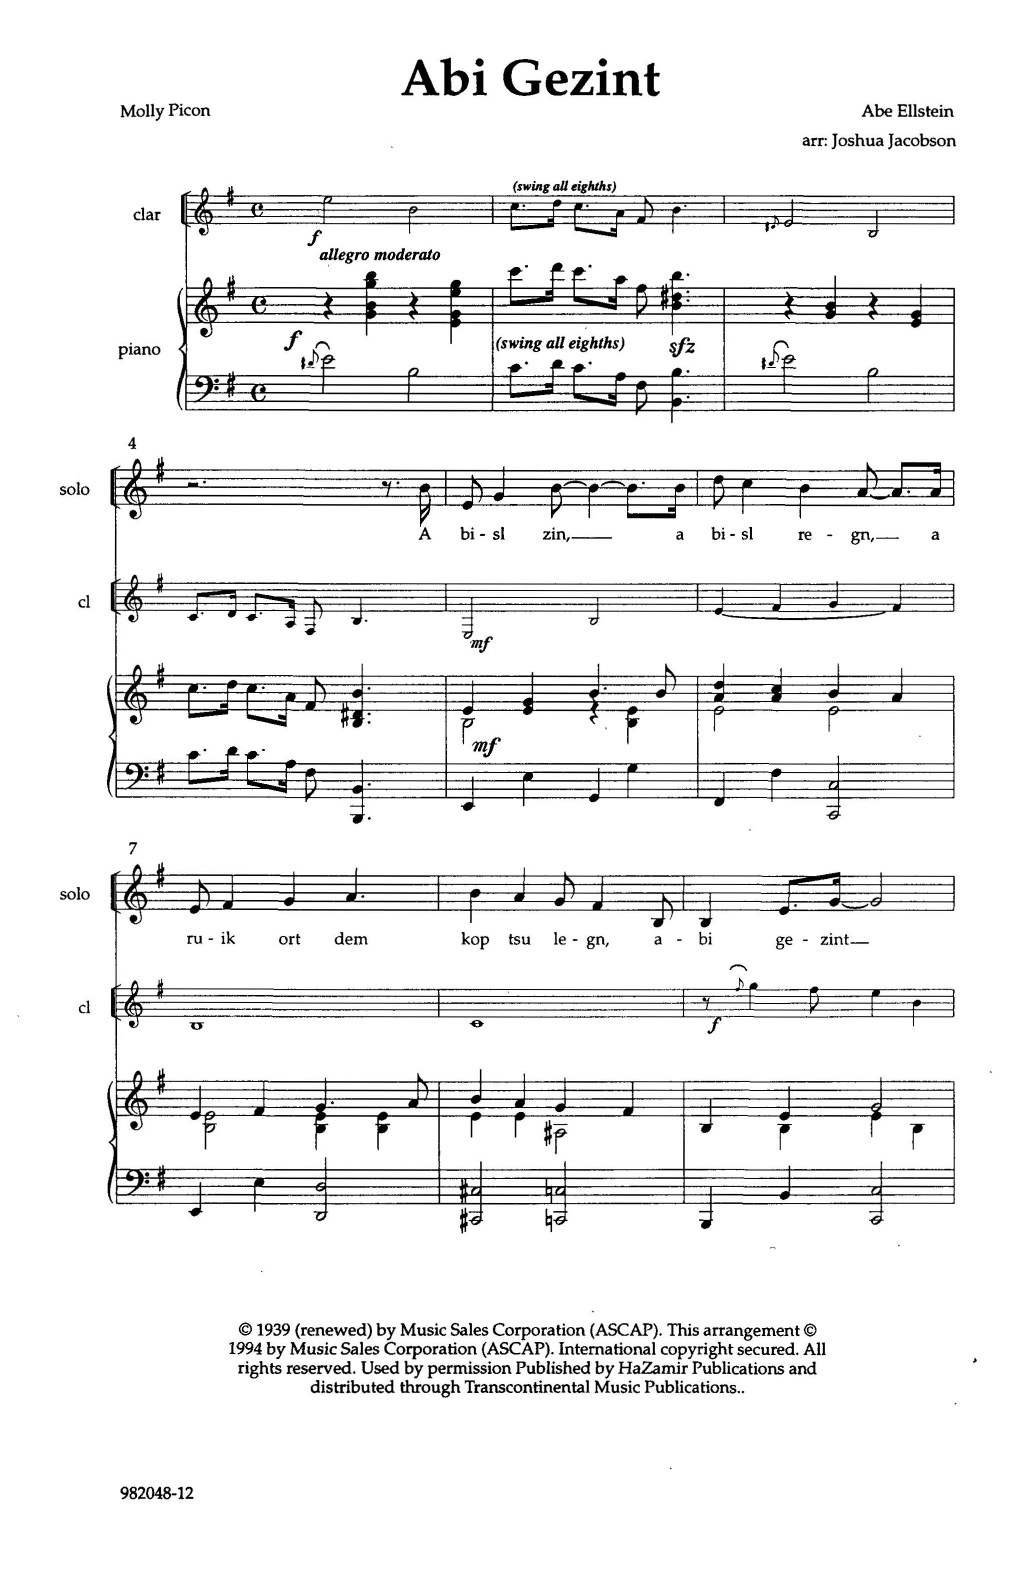 Abe Ellstein Abi Gezint (arr. Joshua Jacobson) sheet music notes and chords arranged for SATB Choir